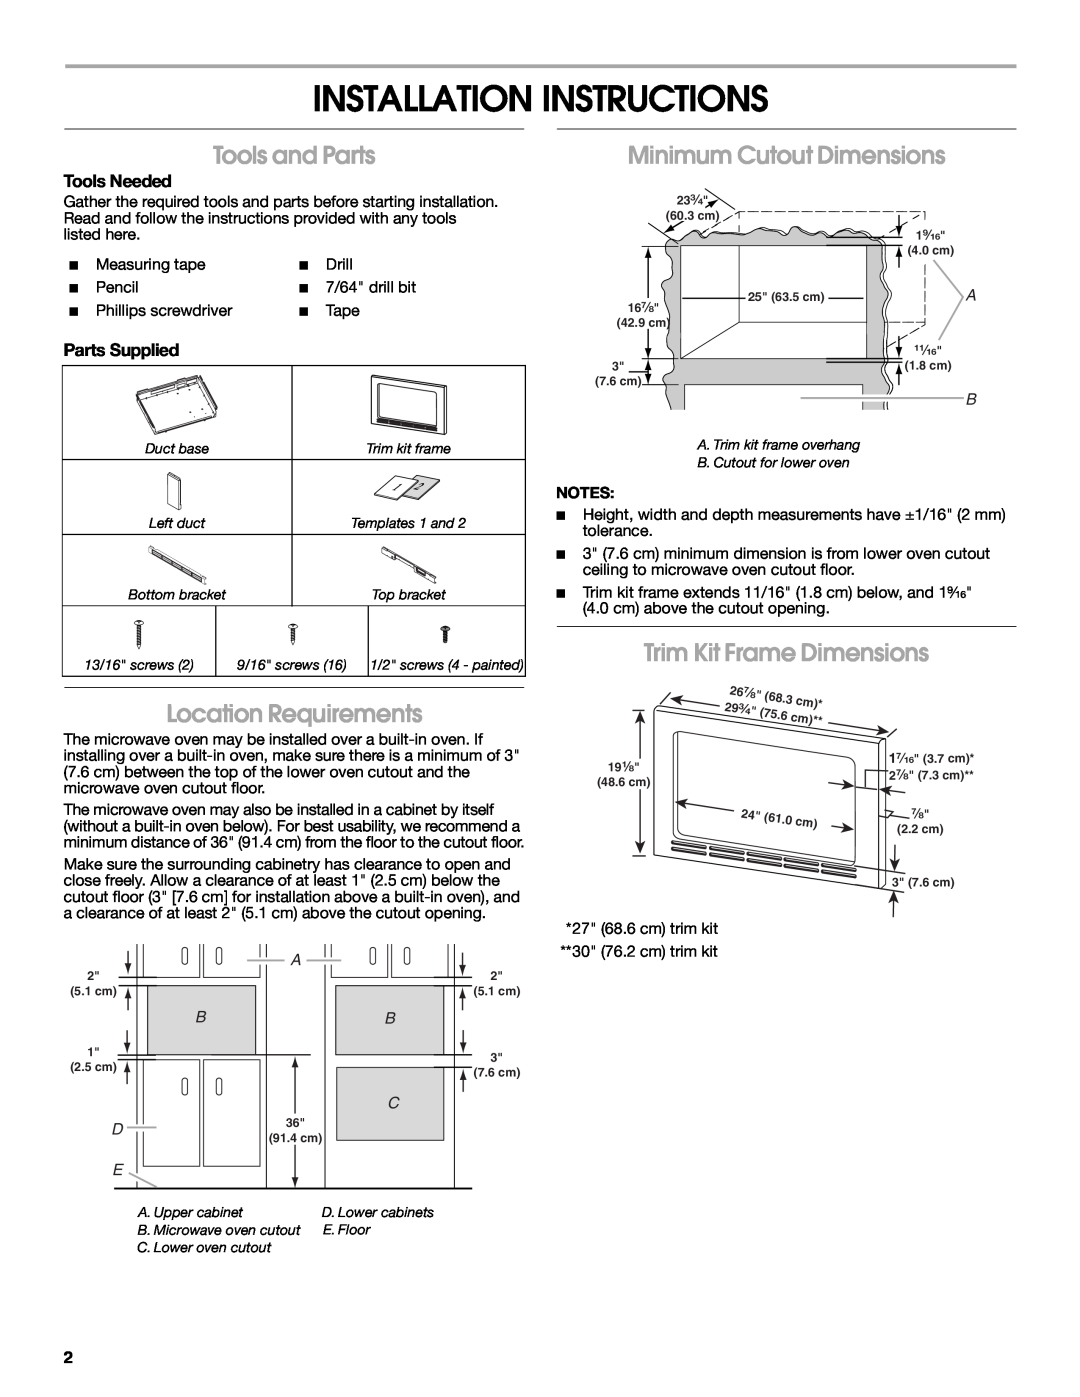 Amana MEW6527, JJW8330DD Installation Instructions, Tools and Parts, Minimum Cutout Dimensions, Trim Kit Frame Dimensions 